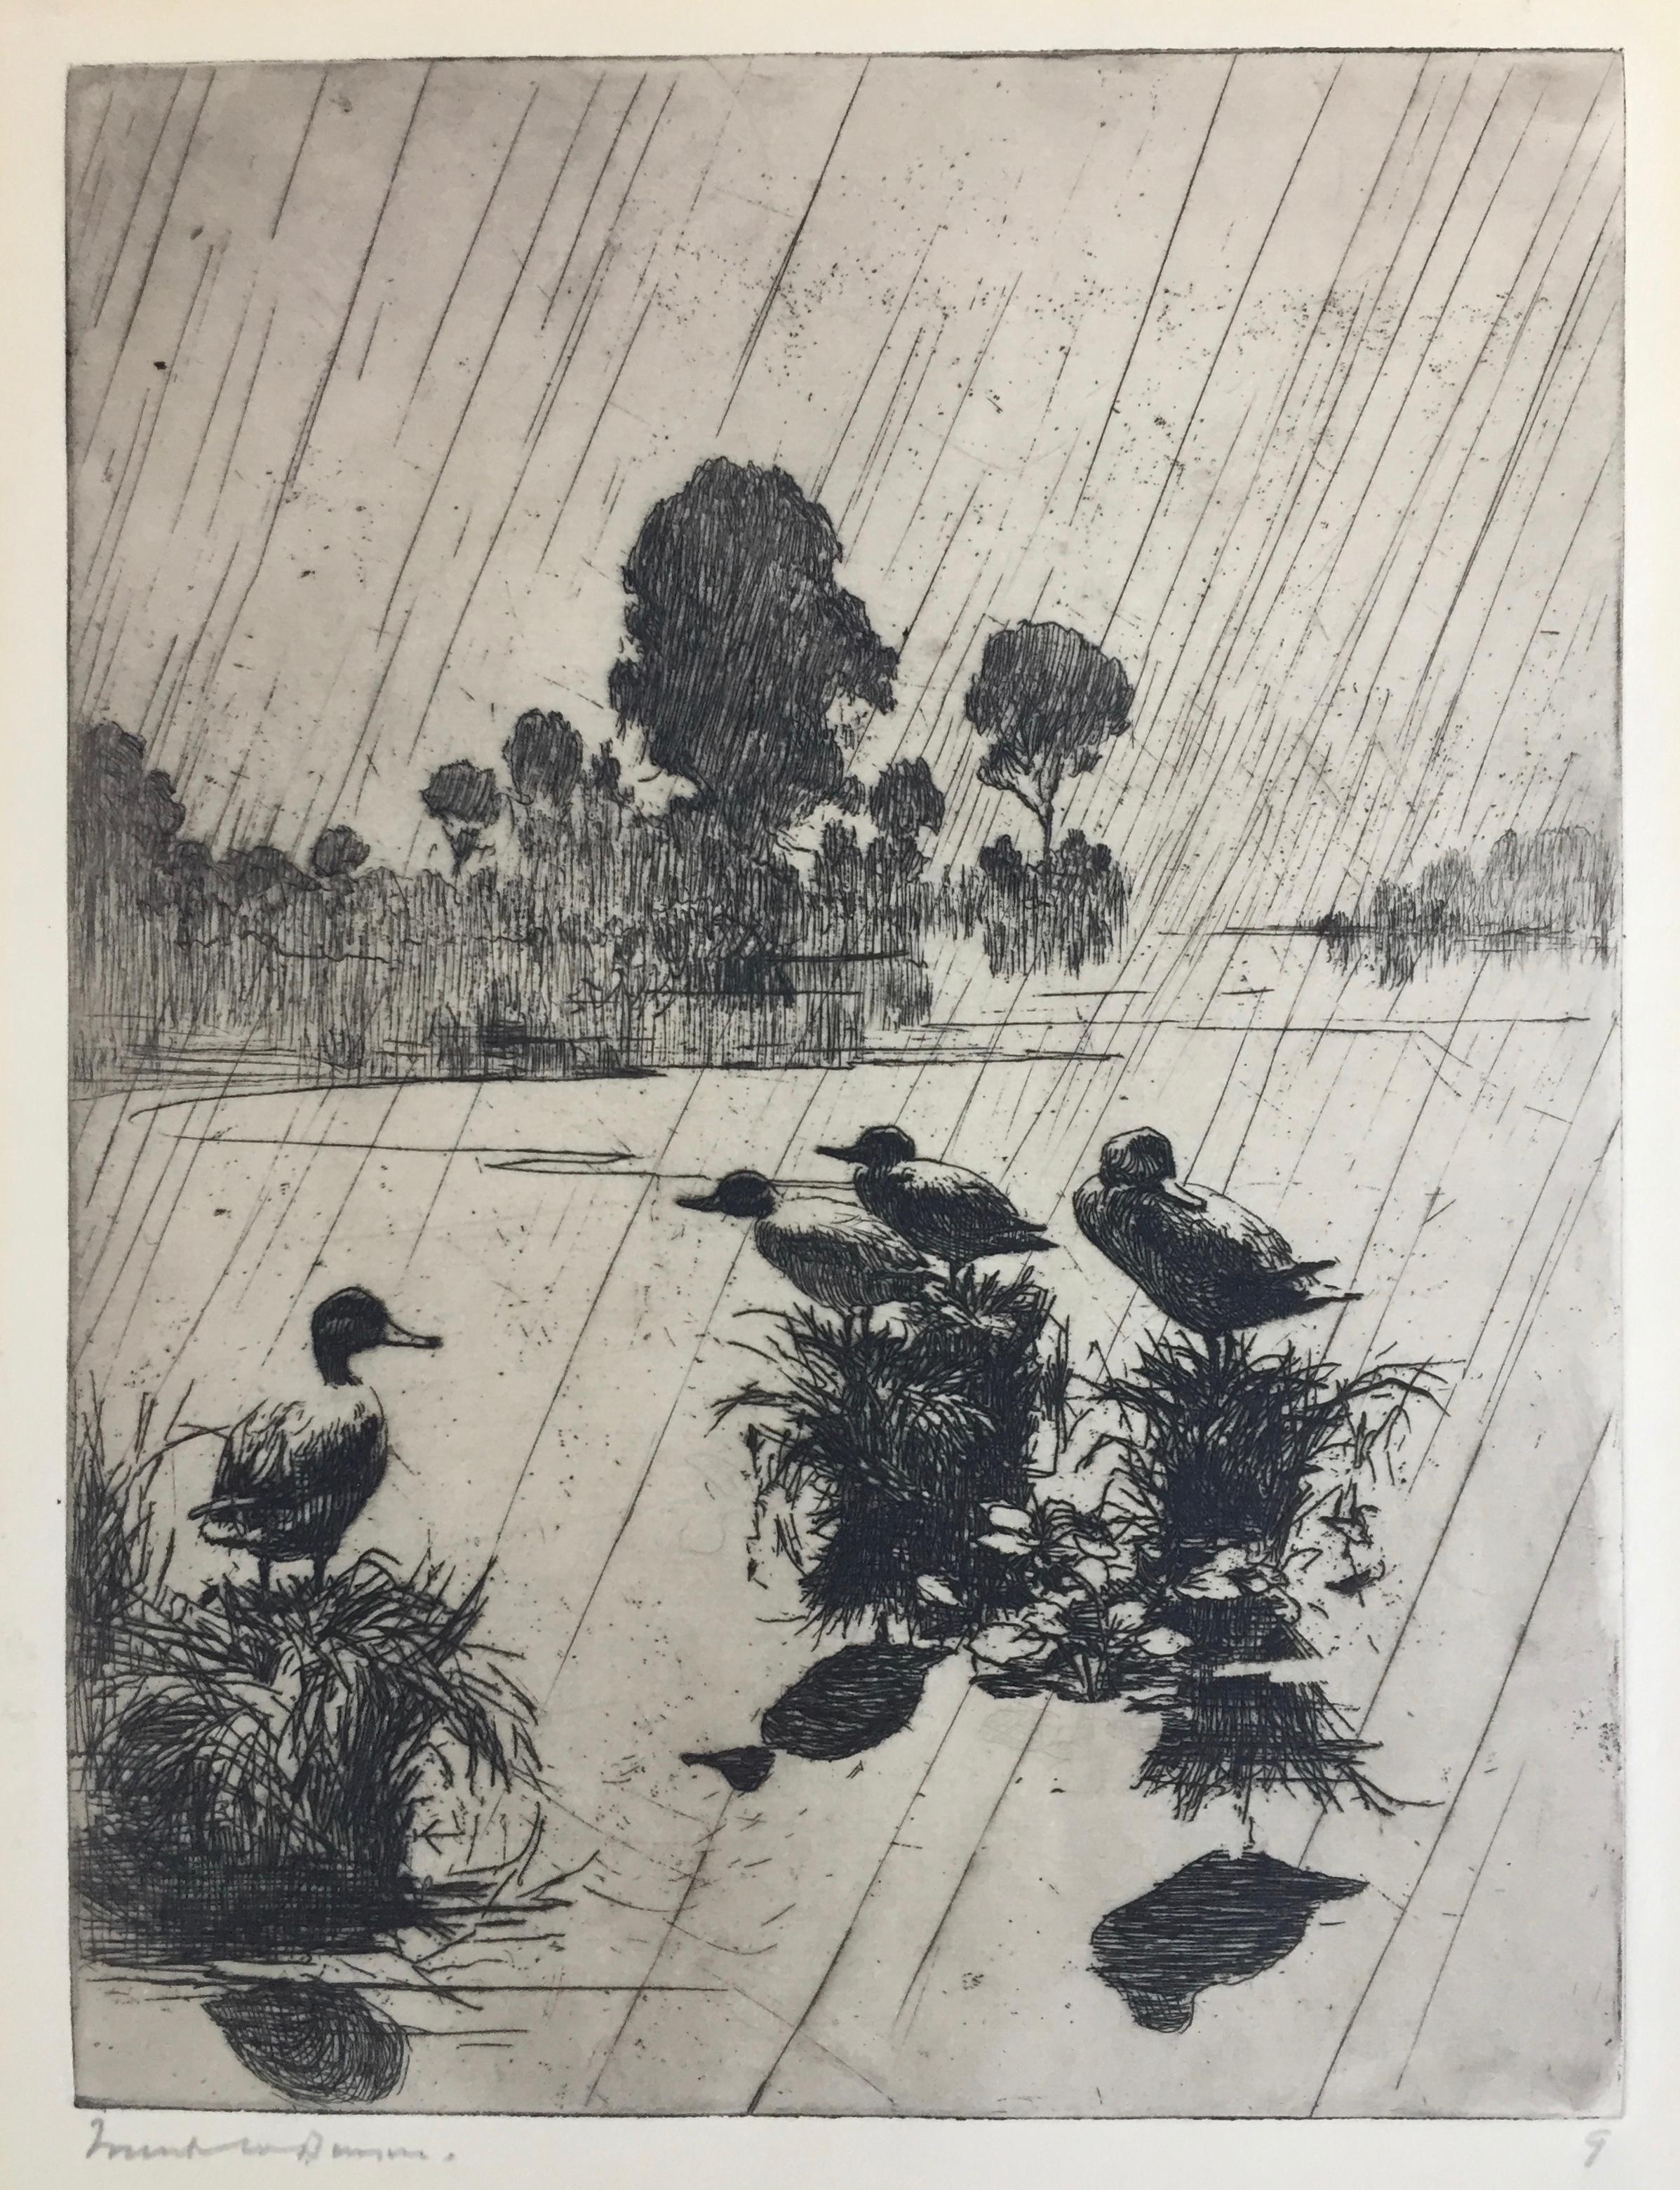 Ducks in the Rain - American Impressionist Print by Frank Benson